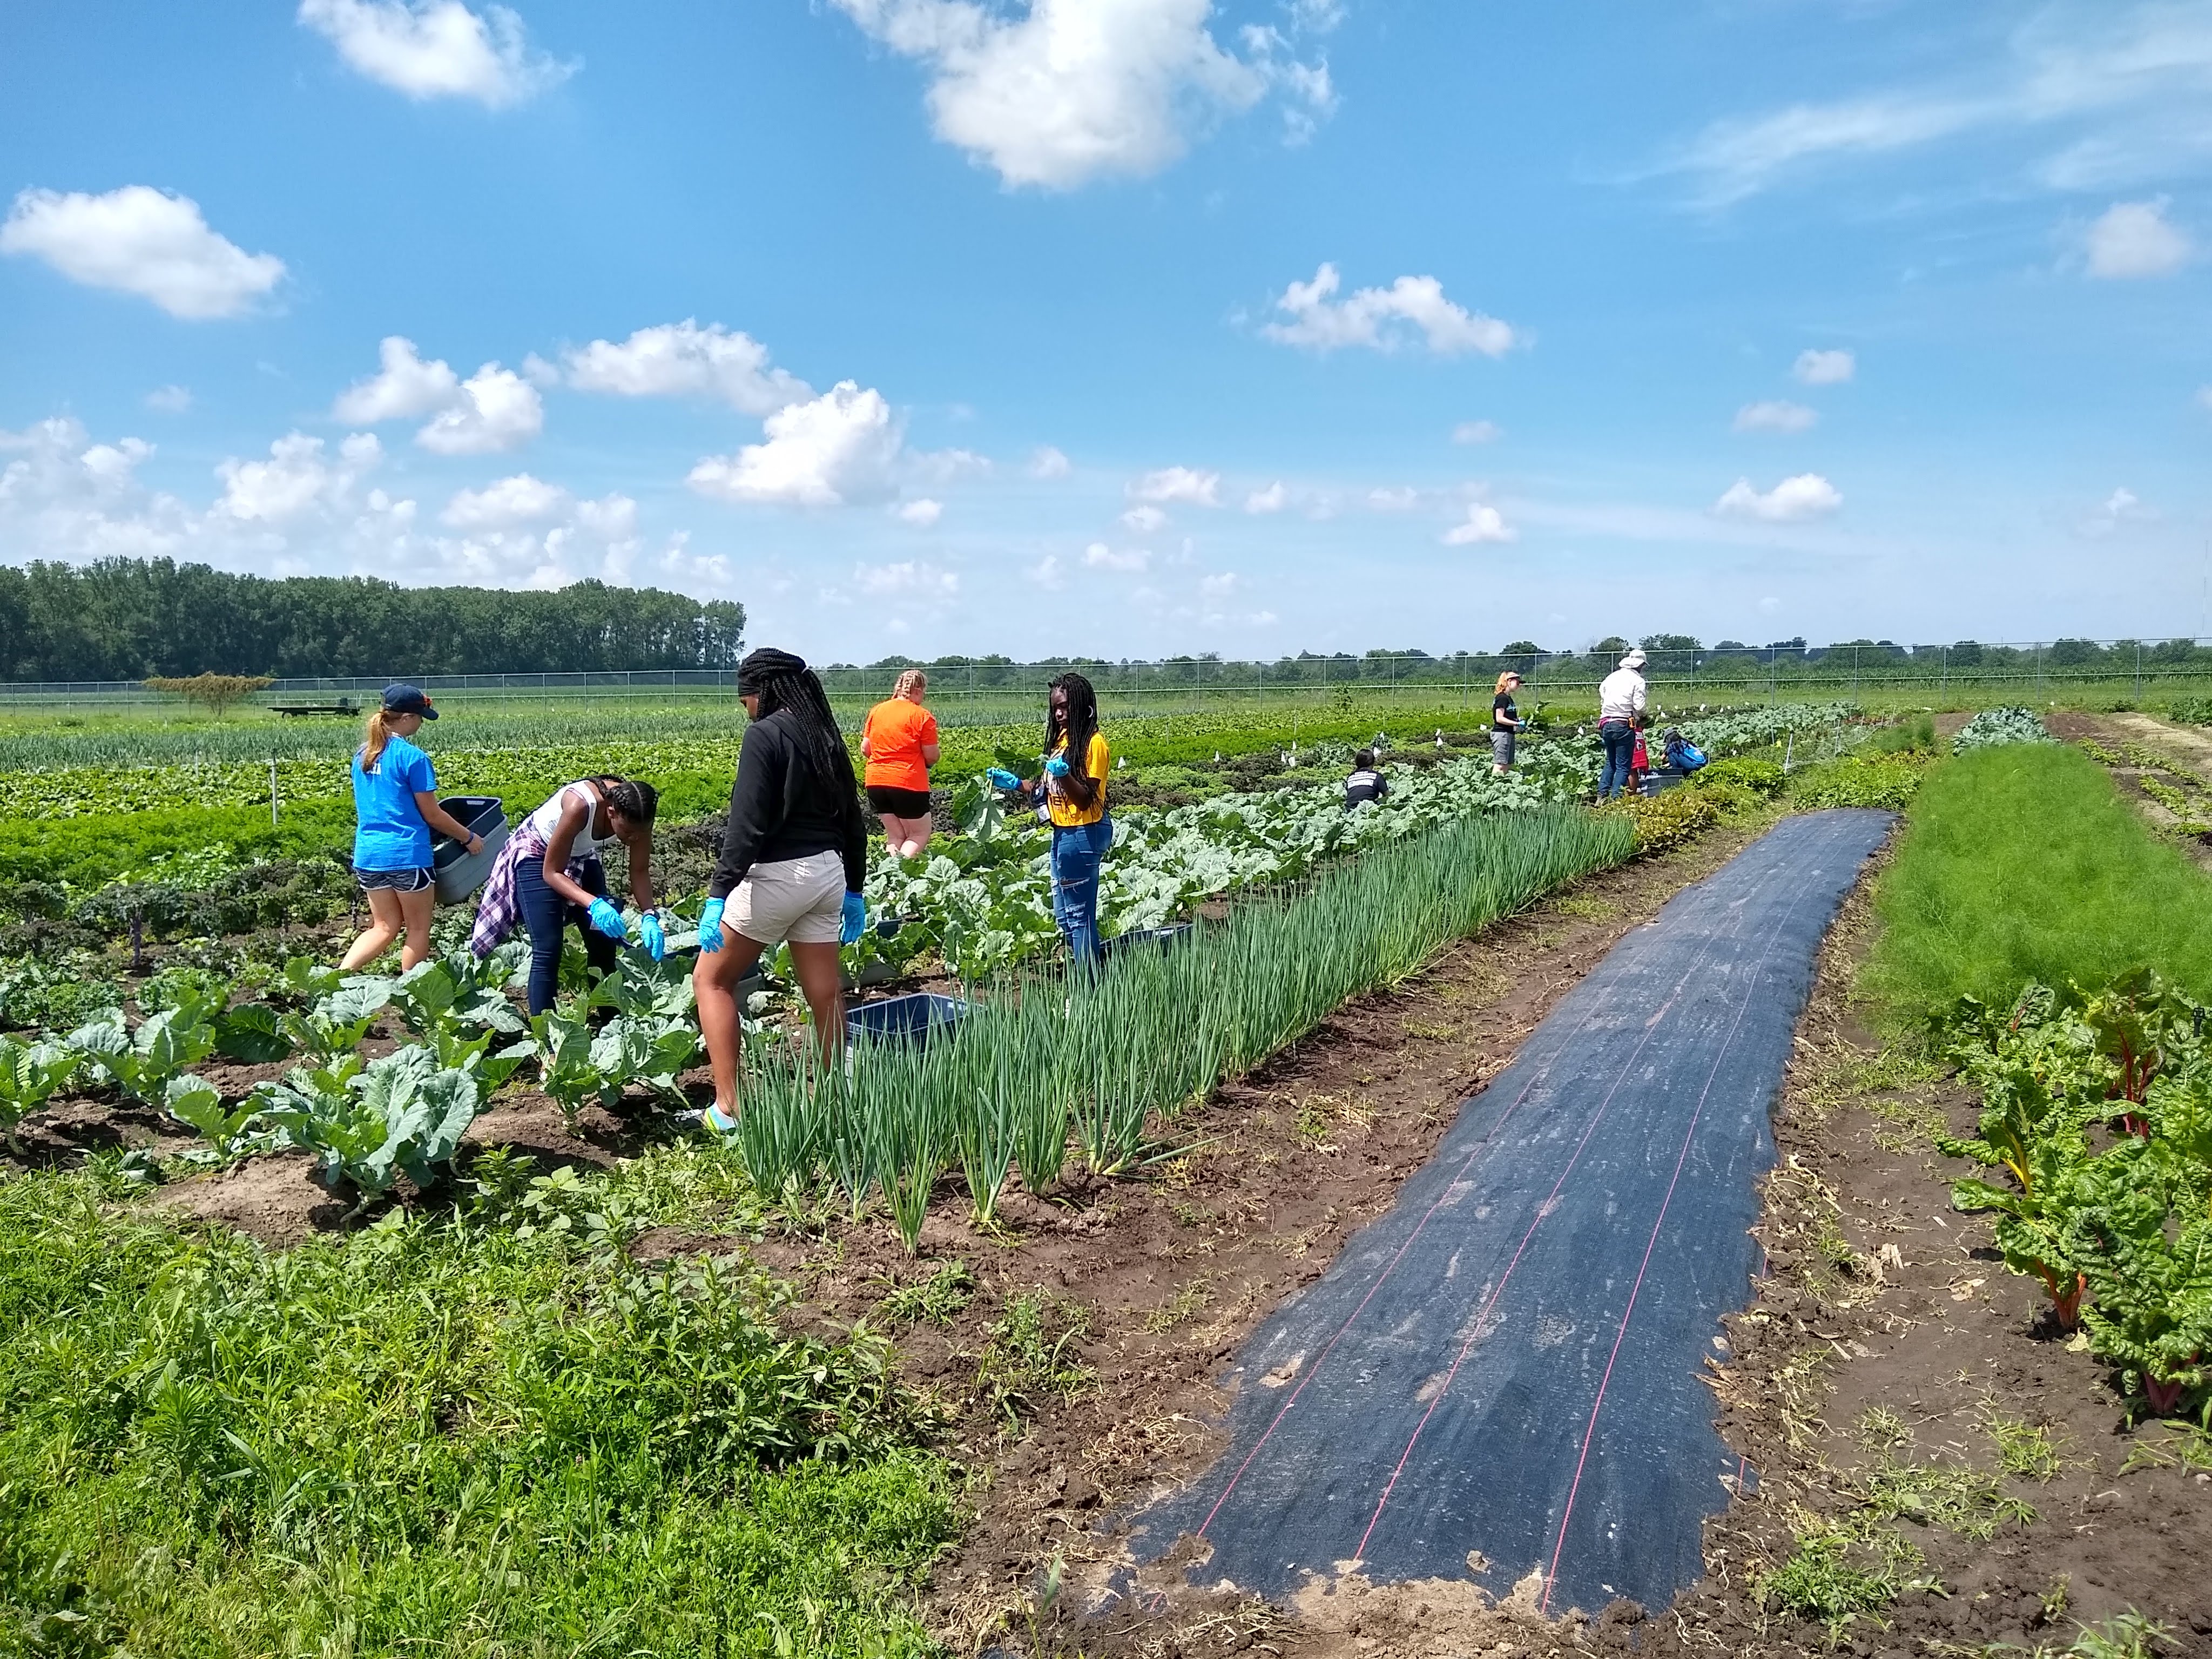 Students working in crop fields.